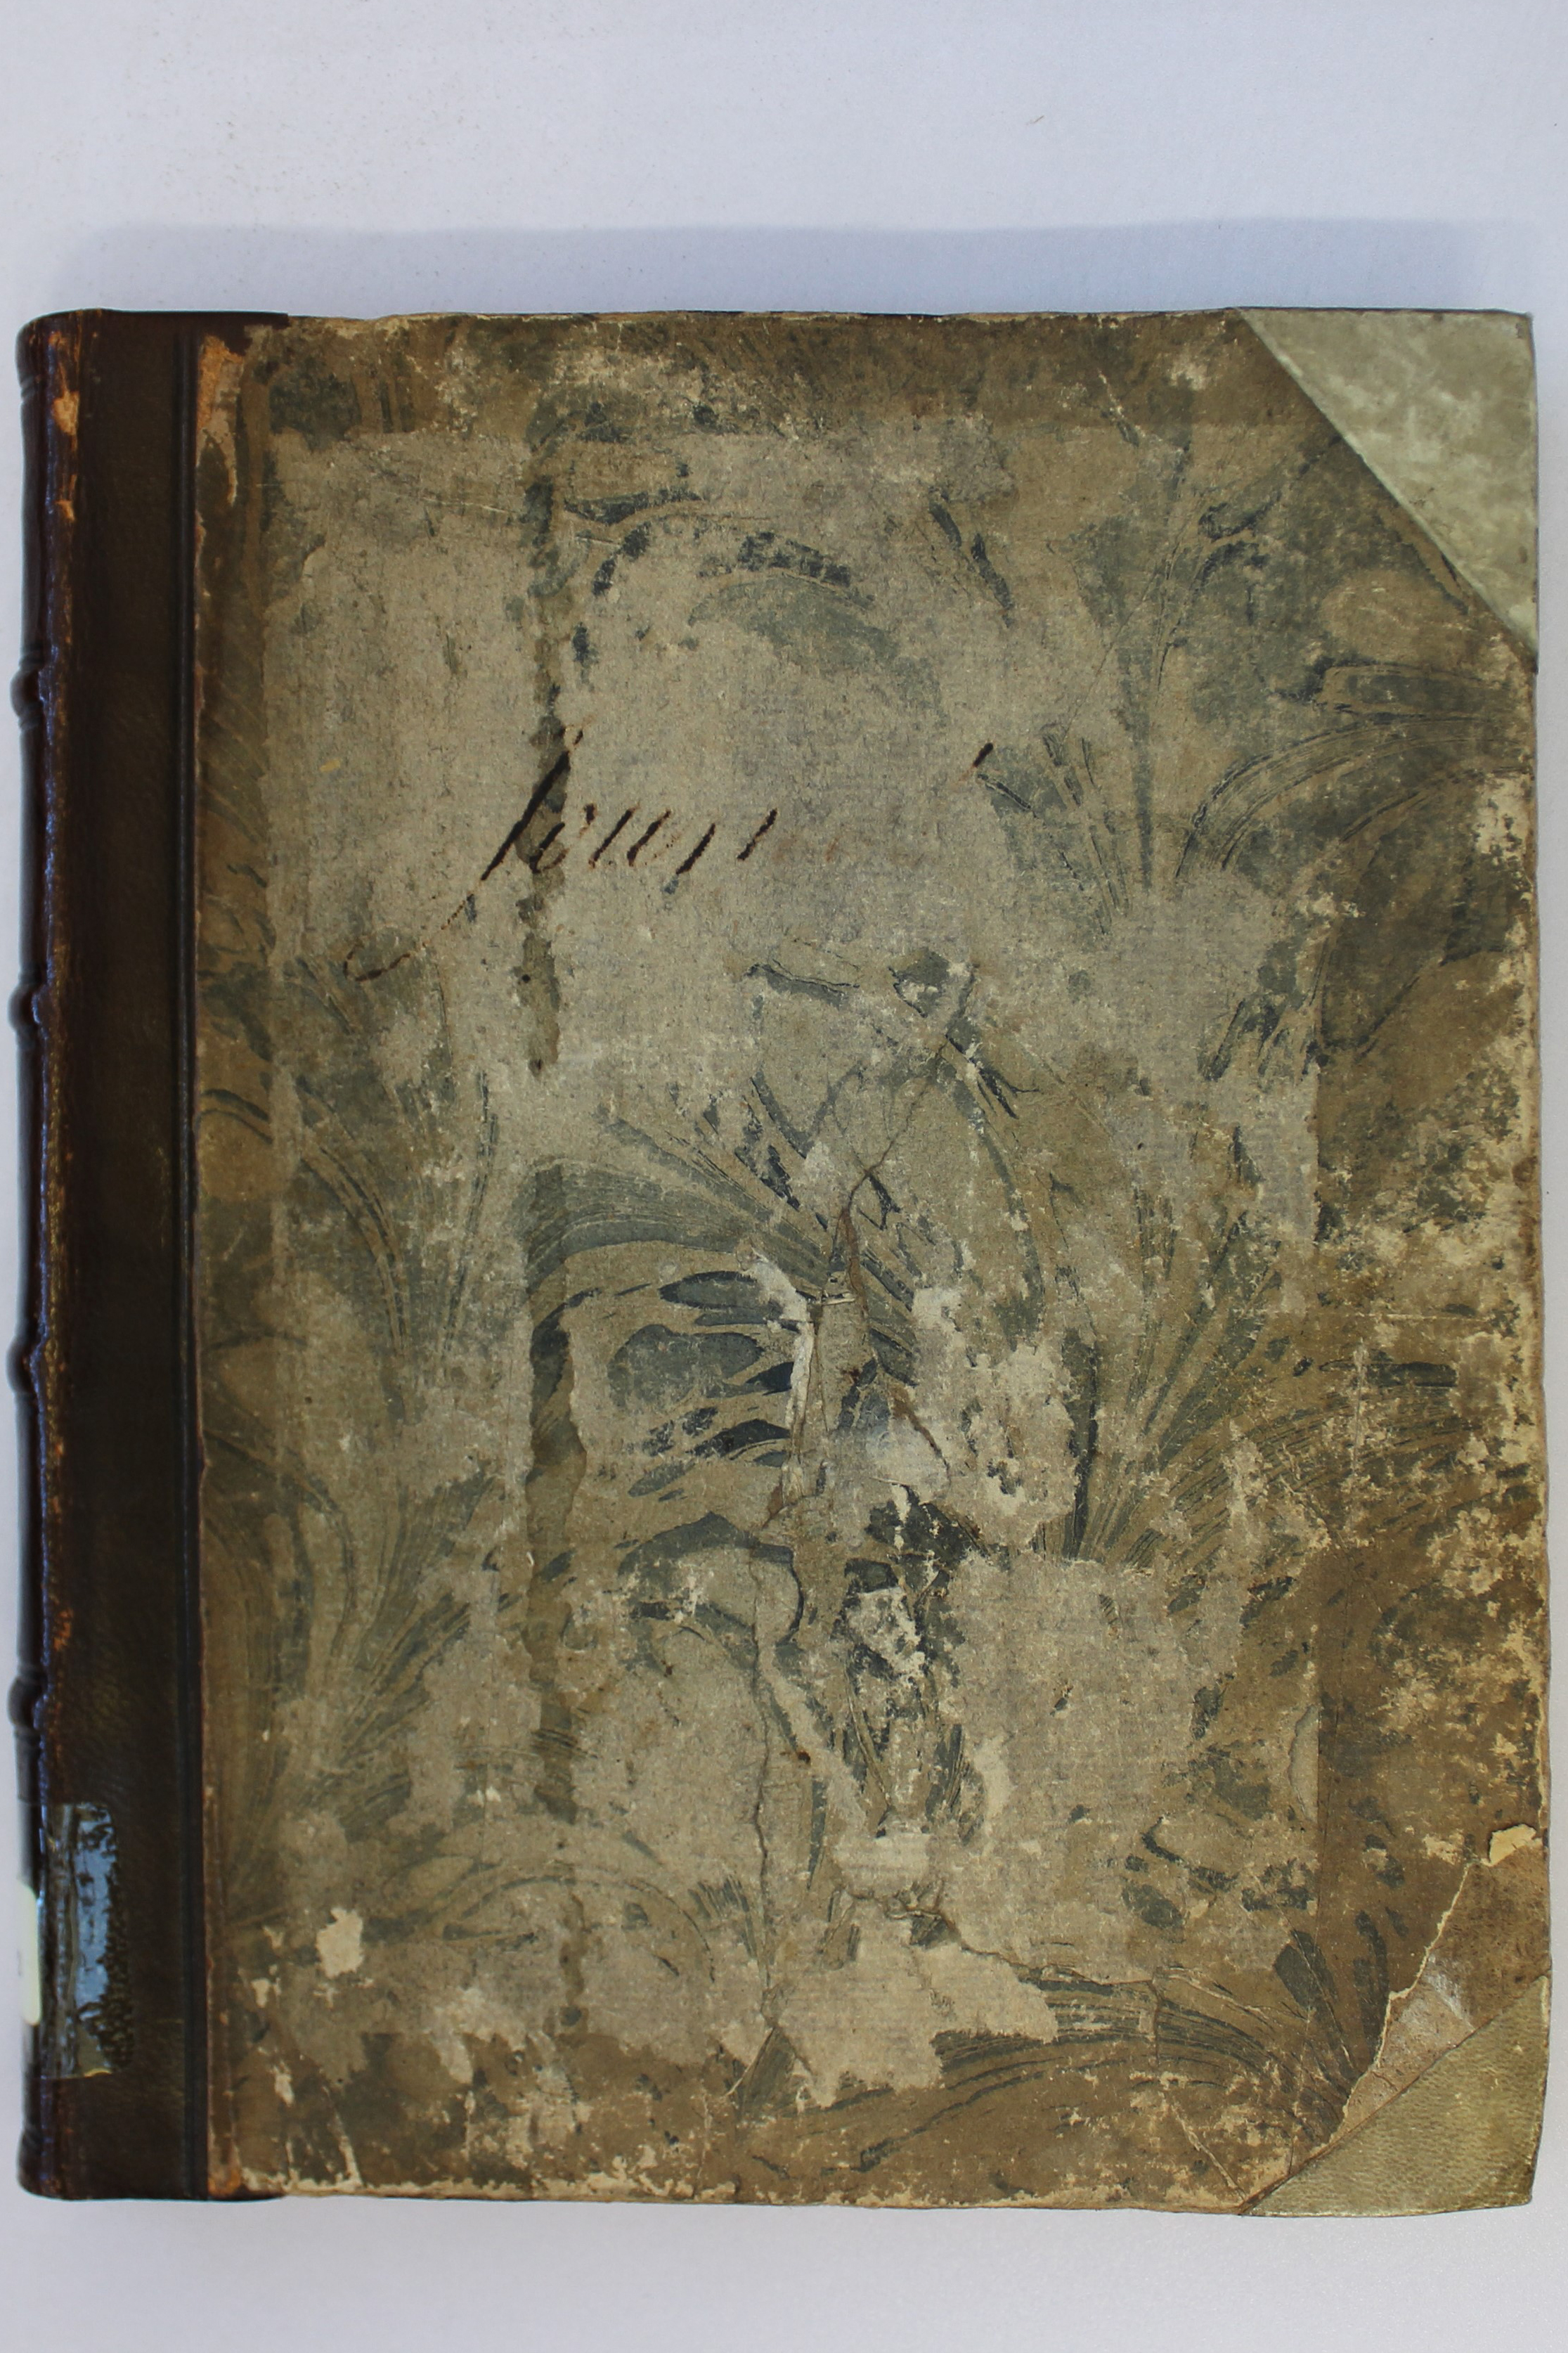 Notebook belonging to doctor Edward Jenner.